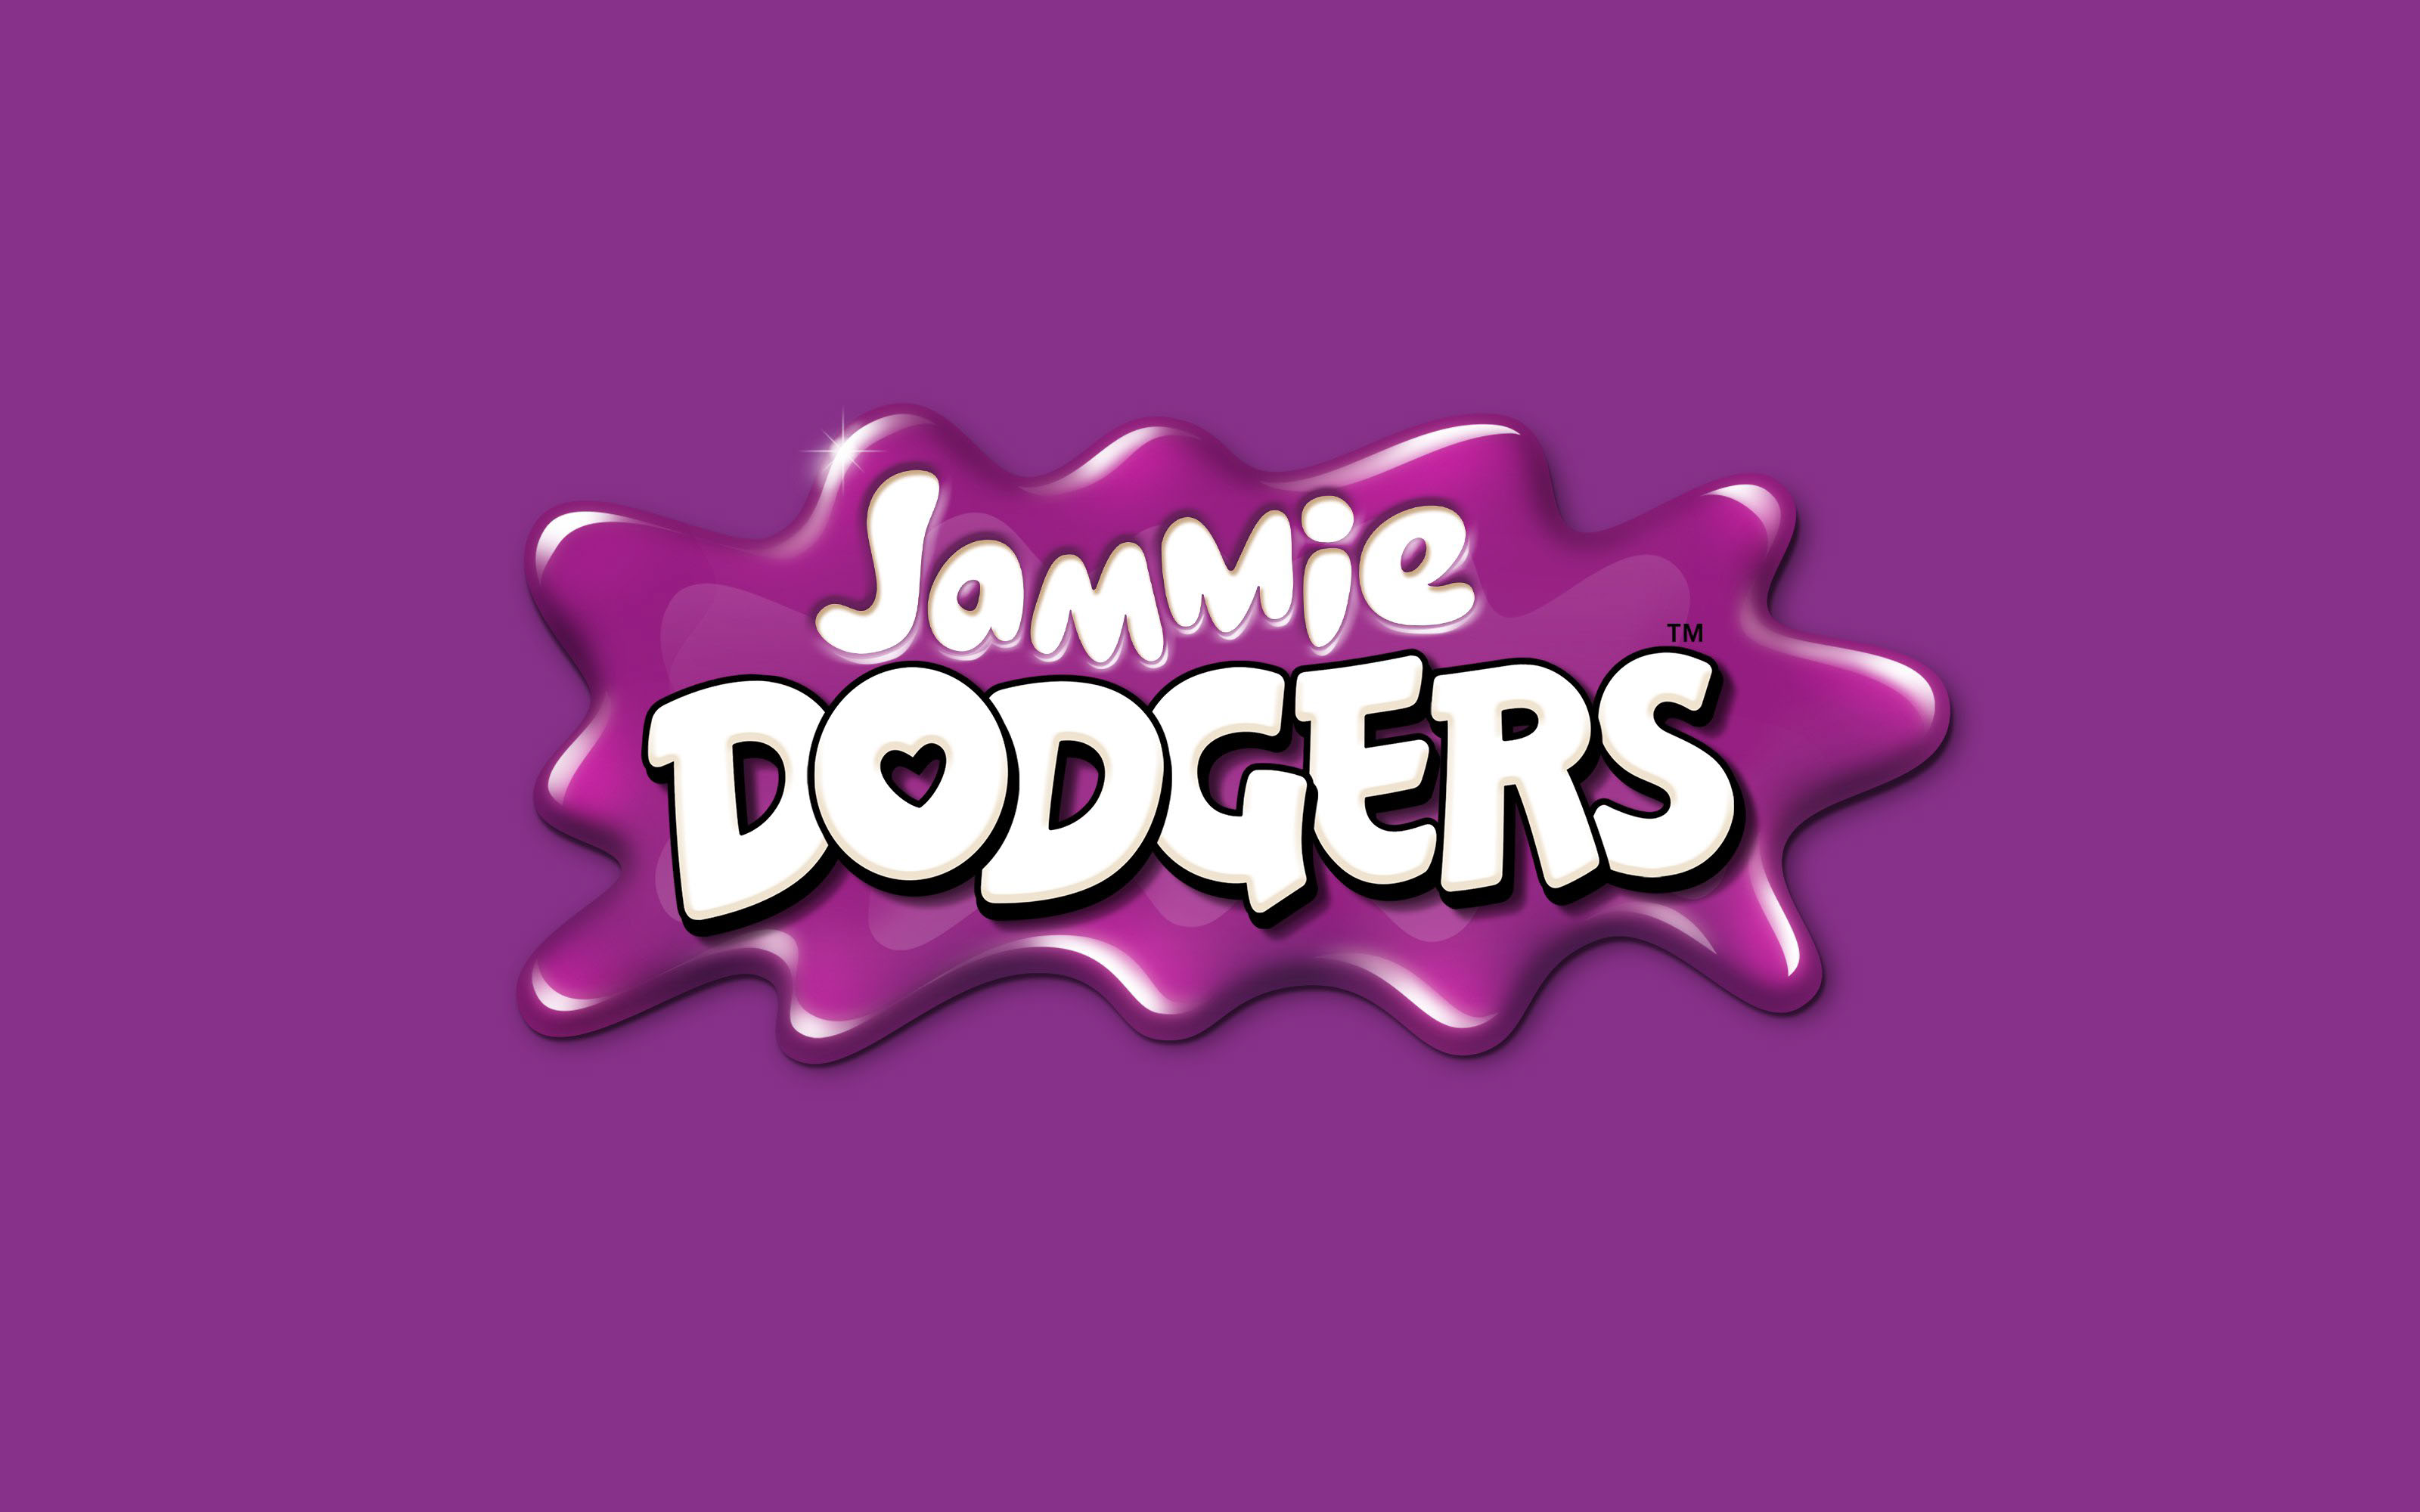 Jammie Dodgers on Behance